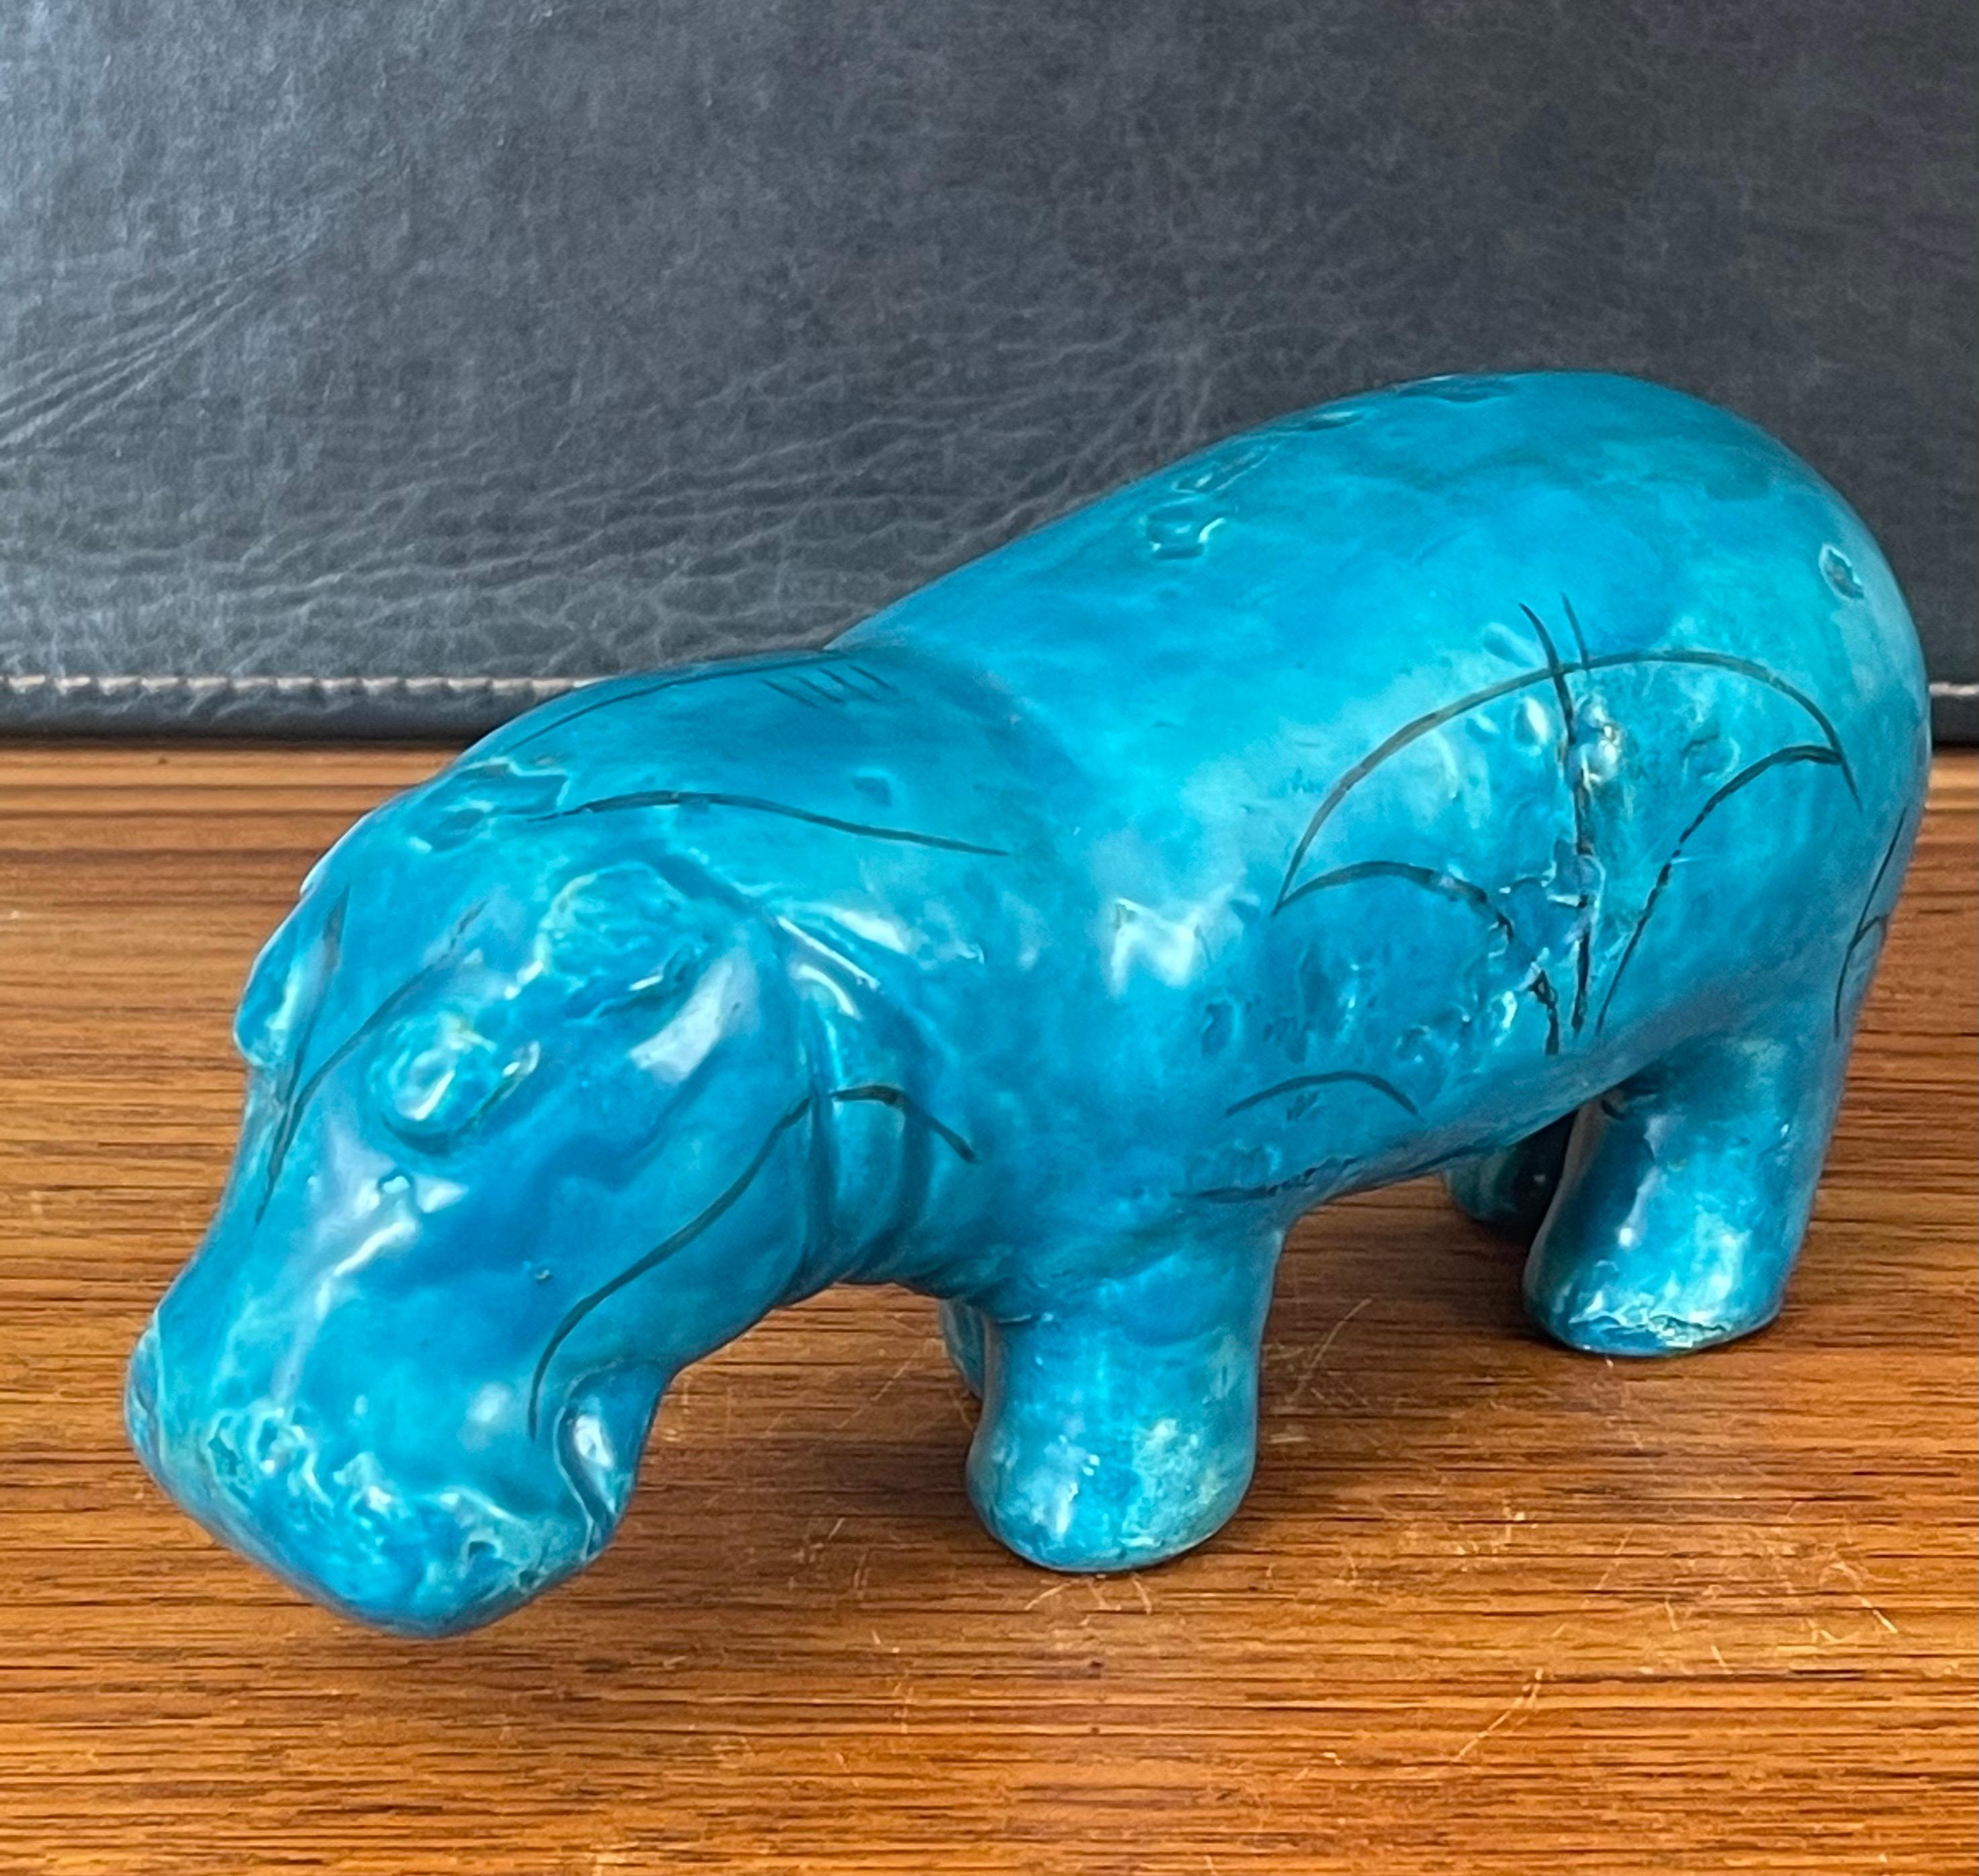 william the hippo for sale